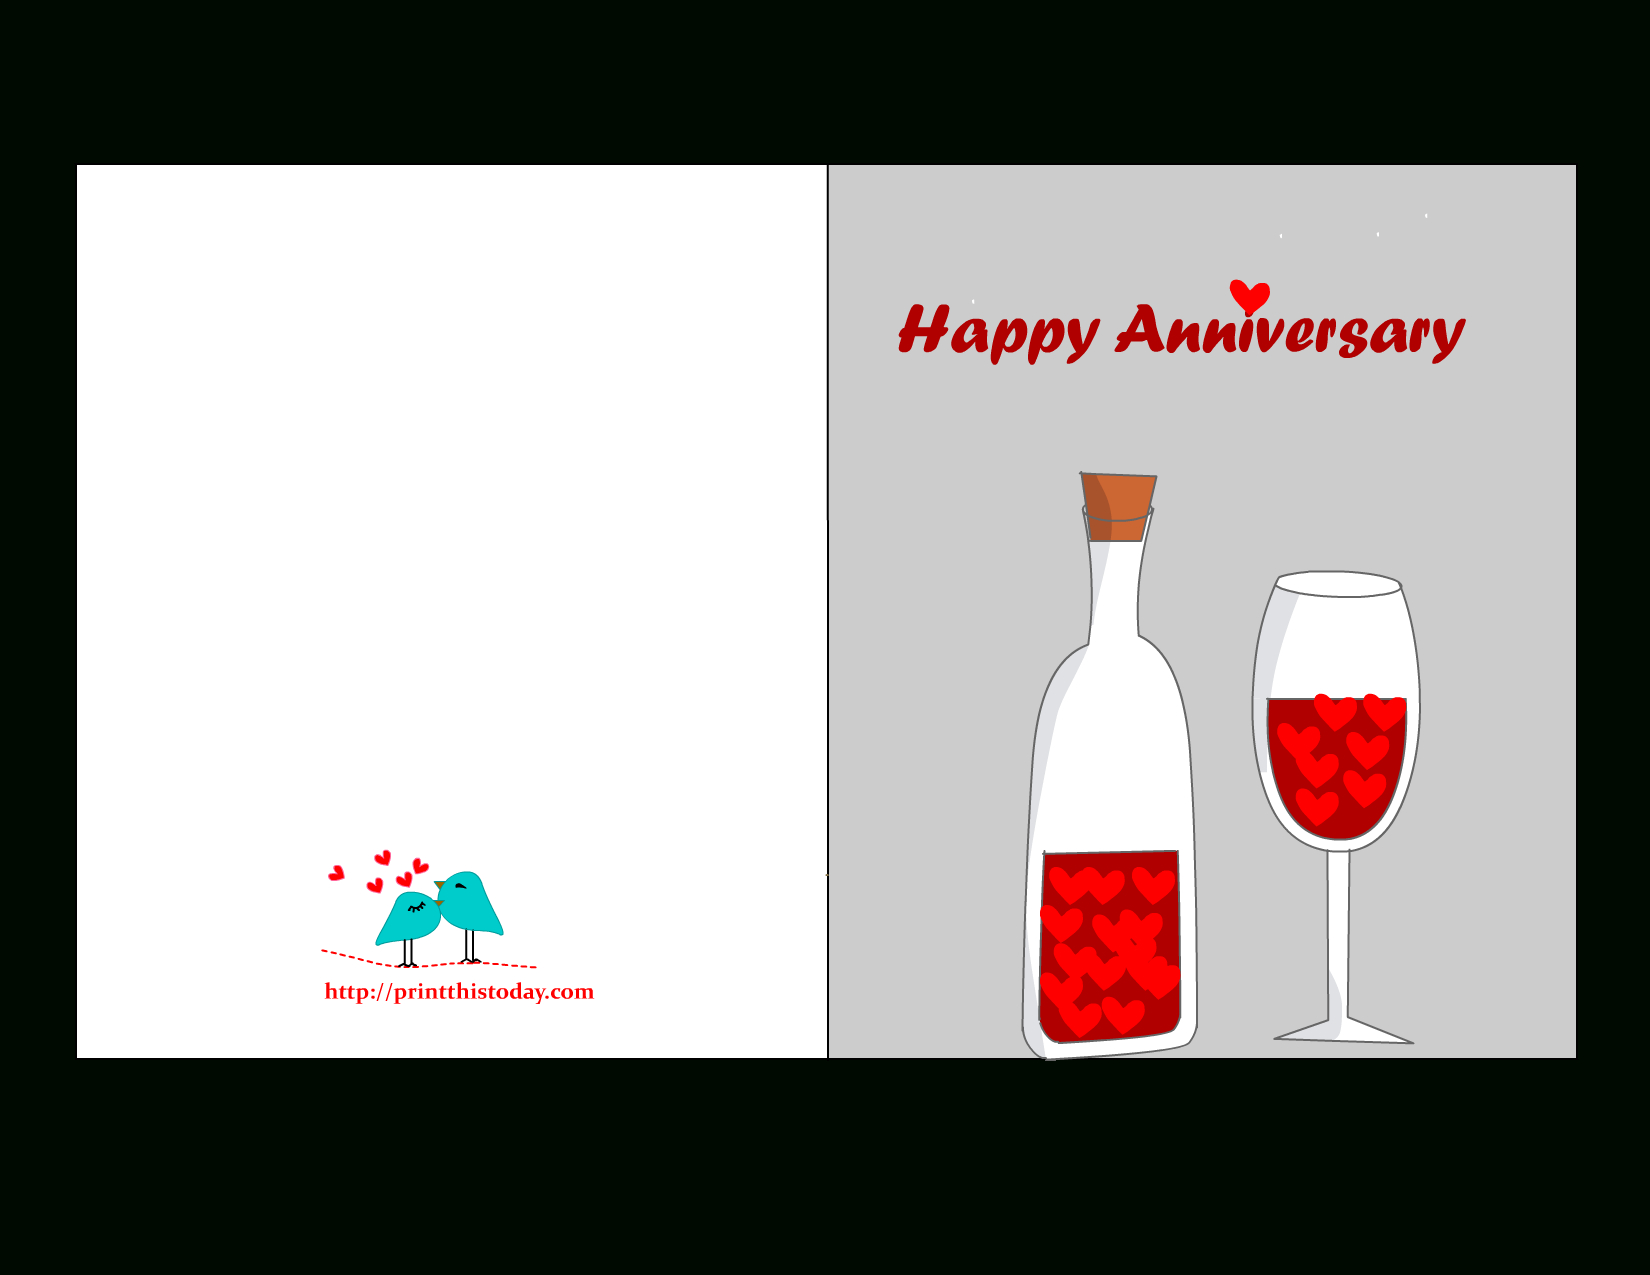 Free Printable Happy Anniversary Cards intended for Free Printable Anniversary Cards